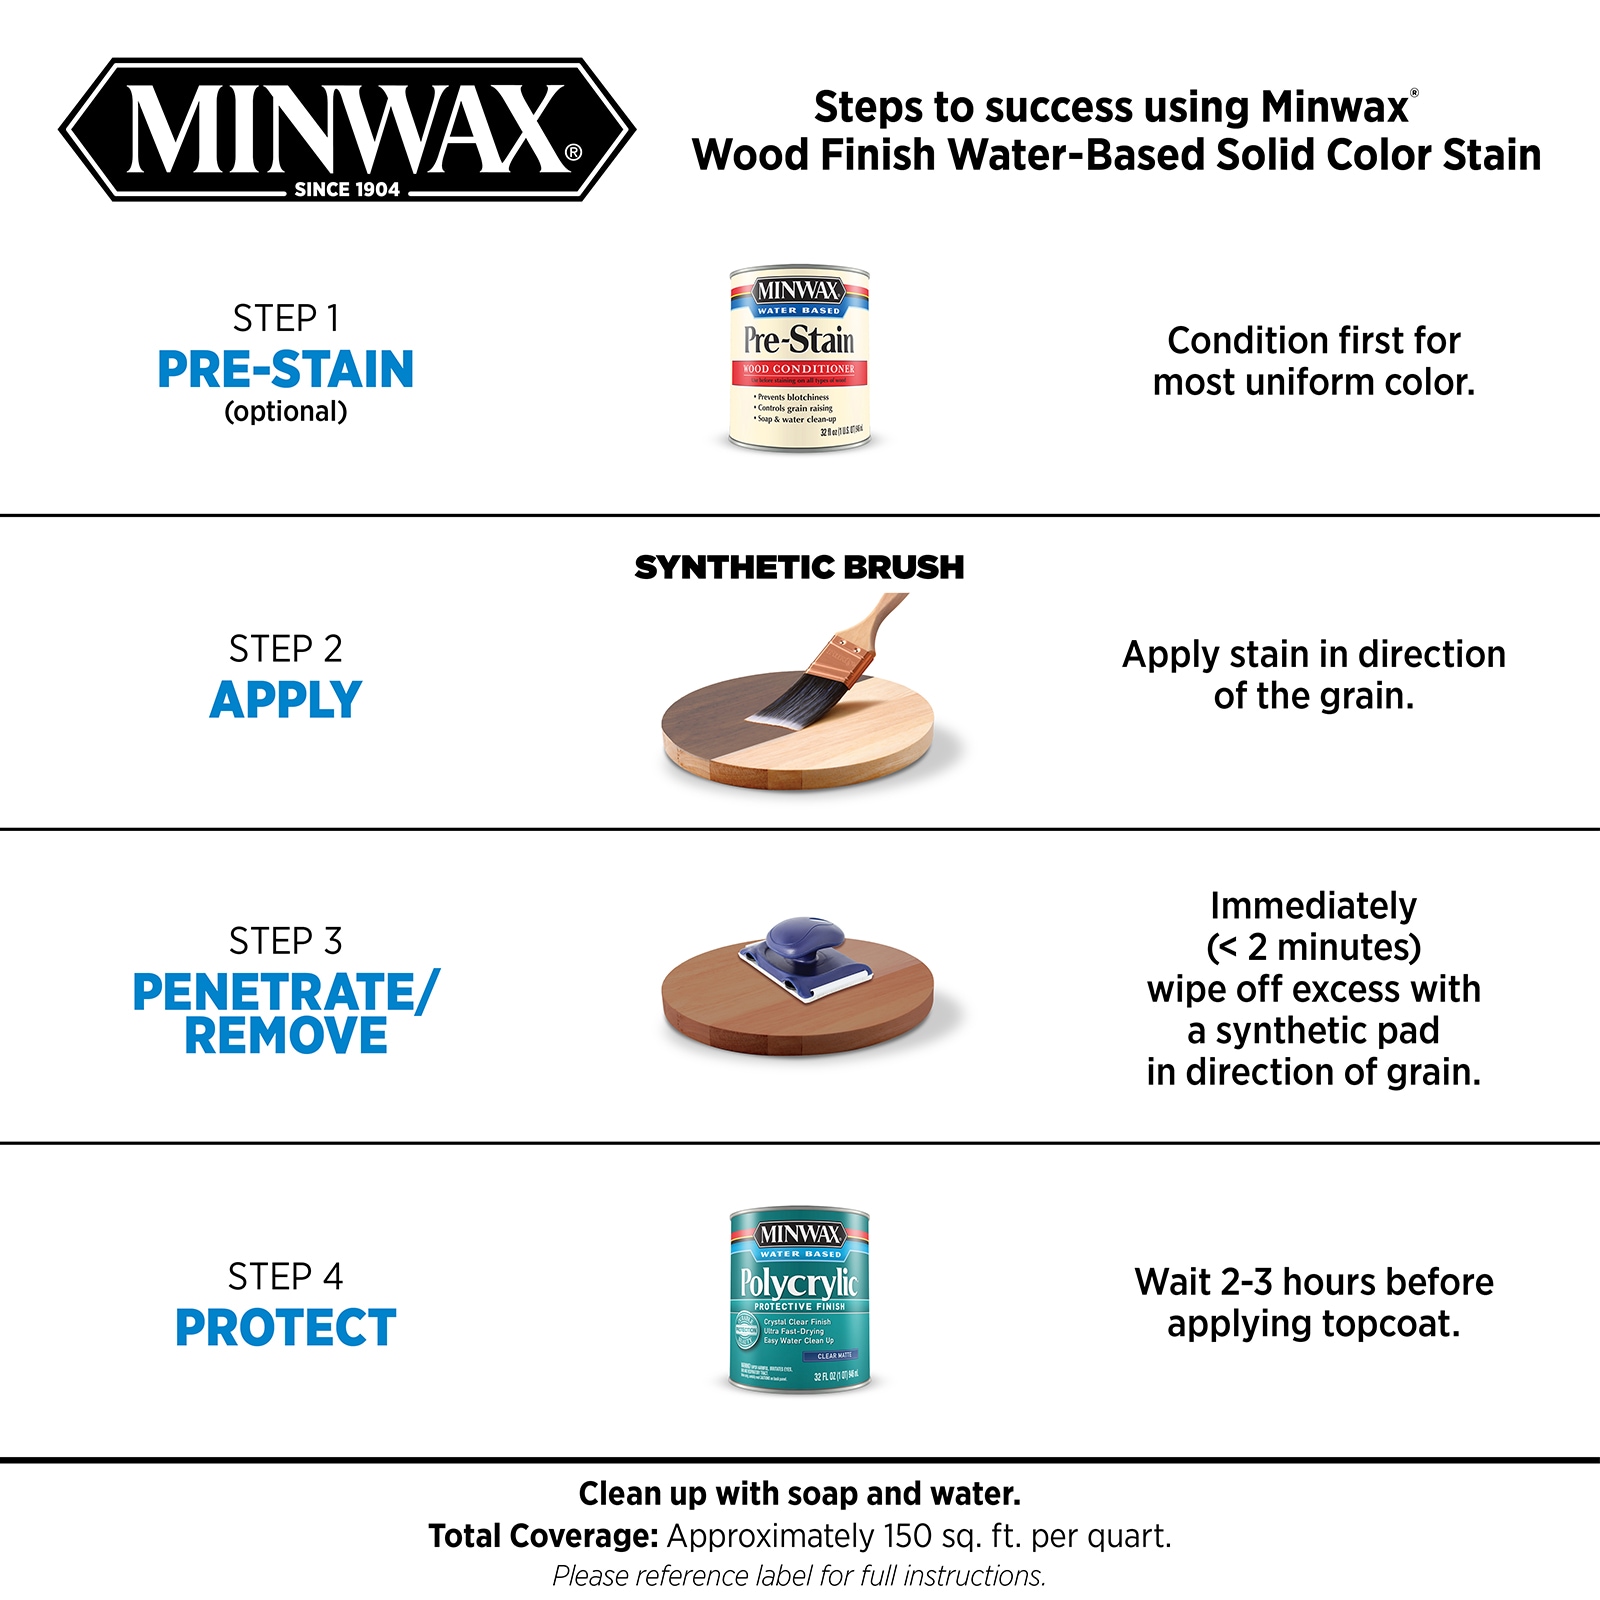 Minwax Wood Finish Water-Based Colton Blue Mw1058 Semi-Transparent